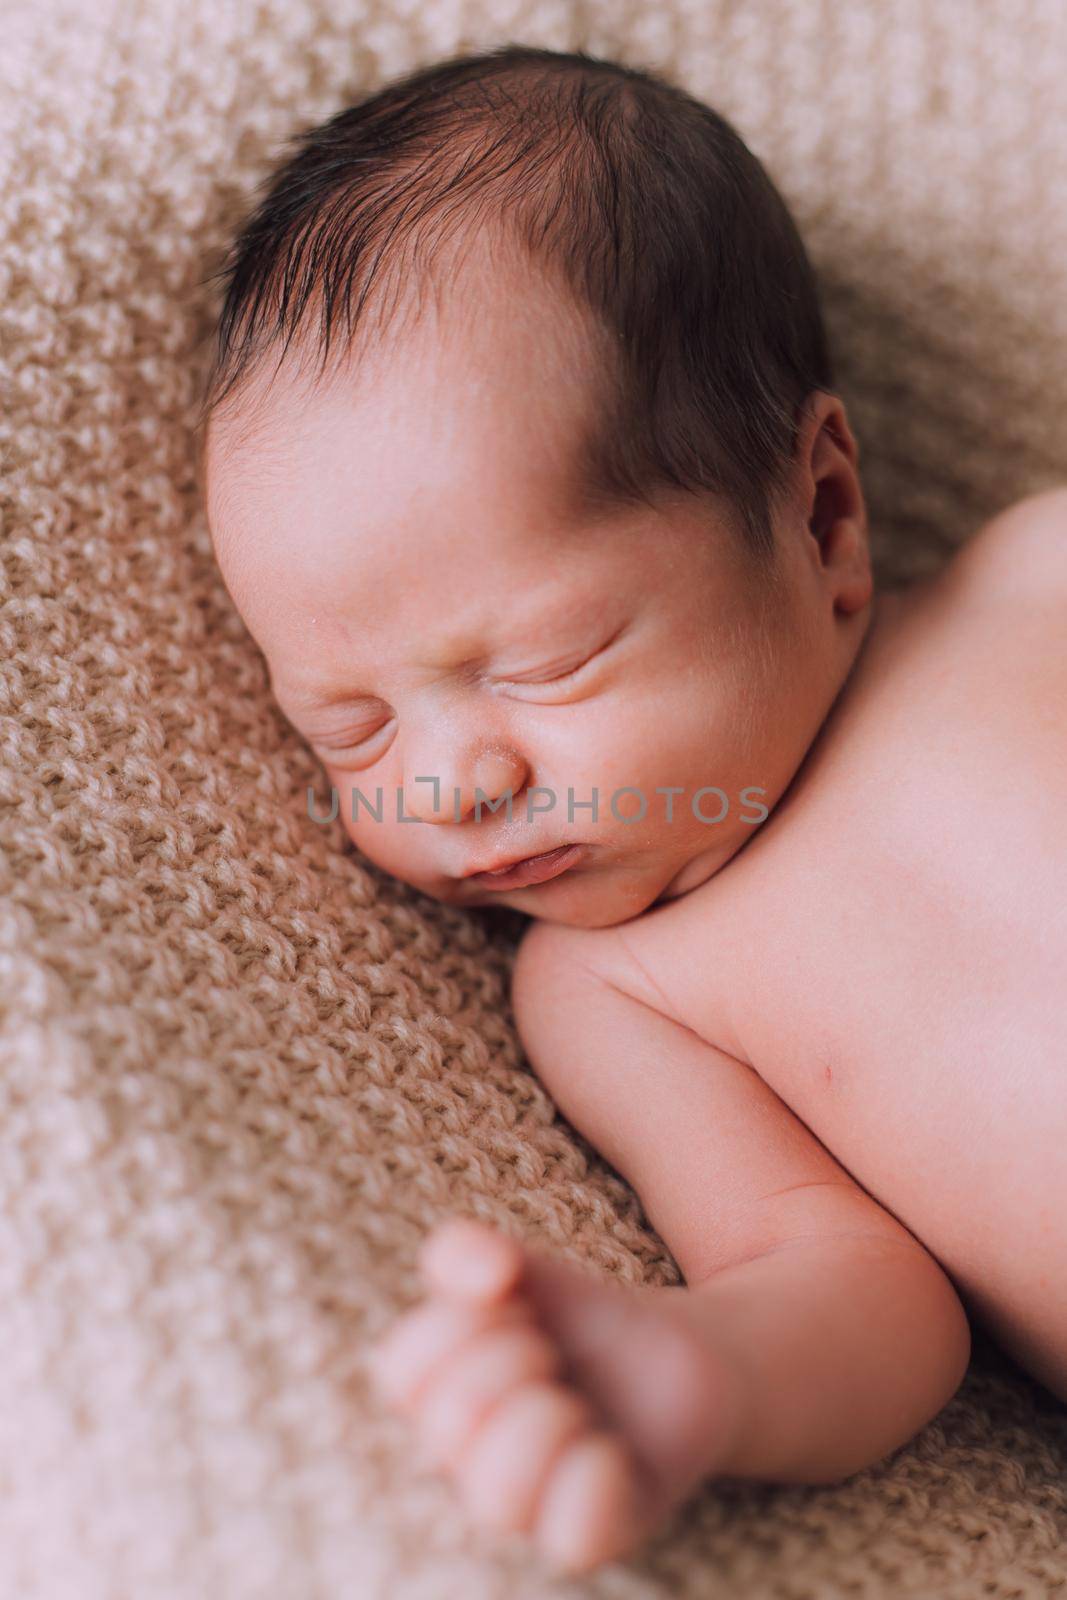 Sleeping newborn baby lifestyle . Sweet baby's dream. An article about newborns.